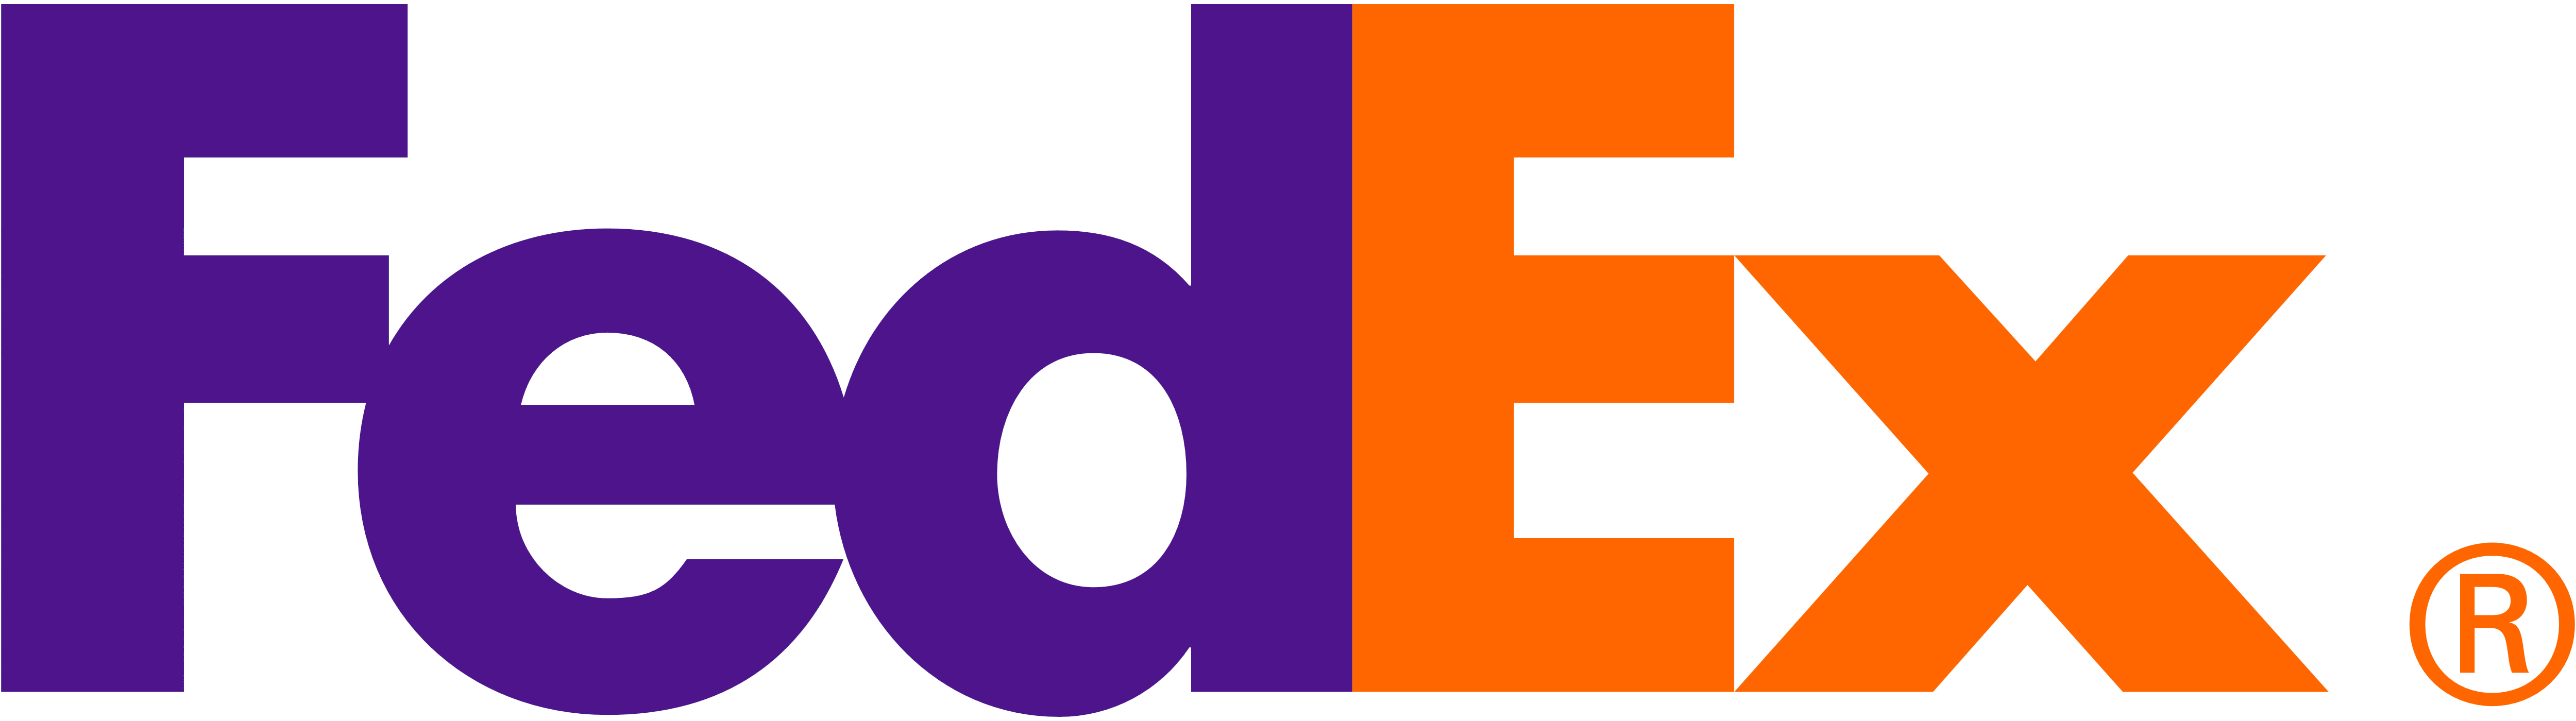 purple, orange FedEx logo